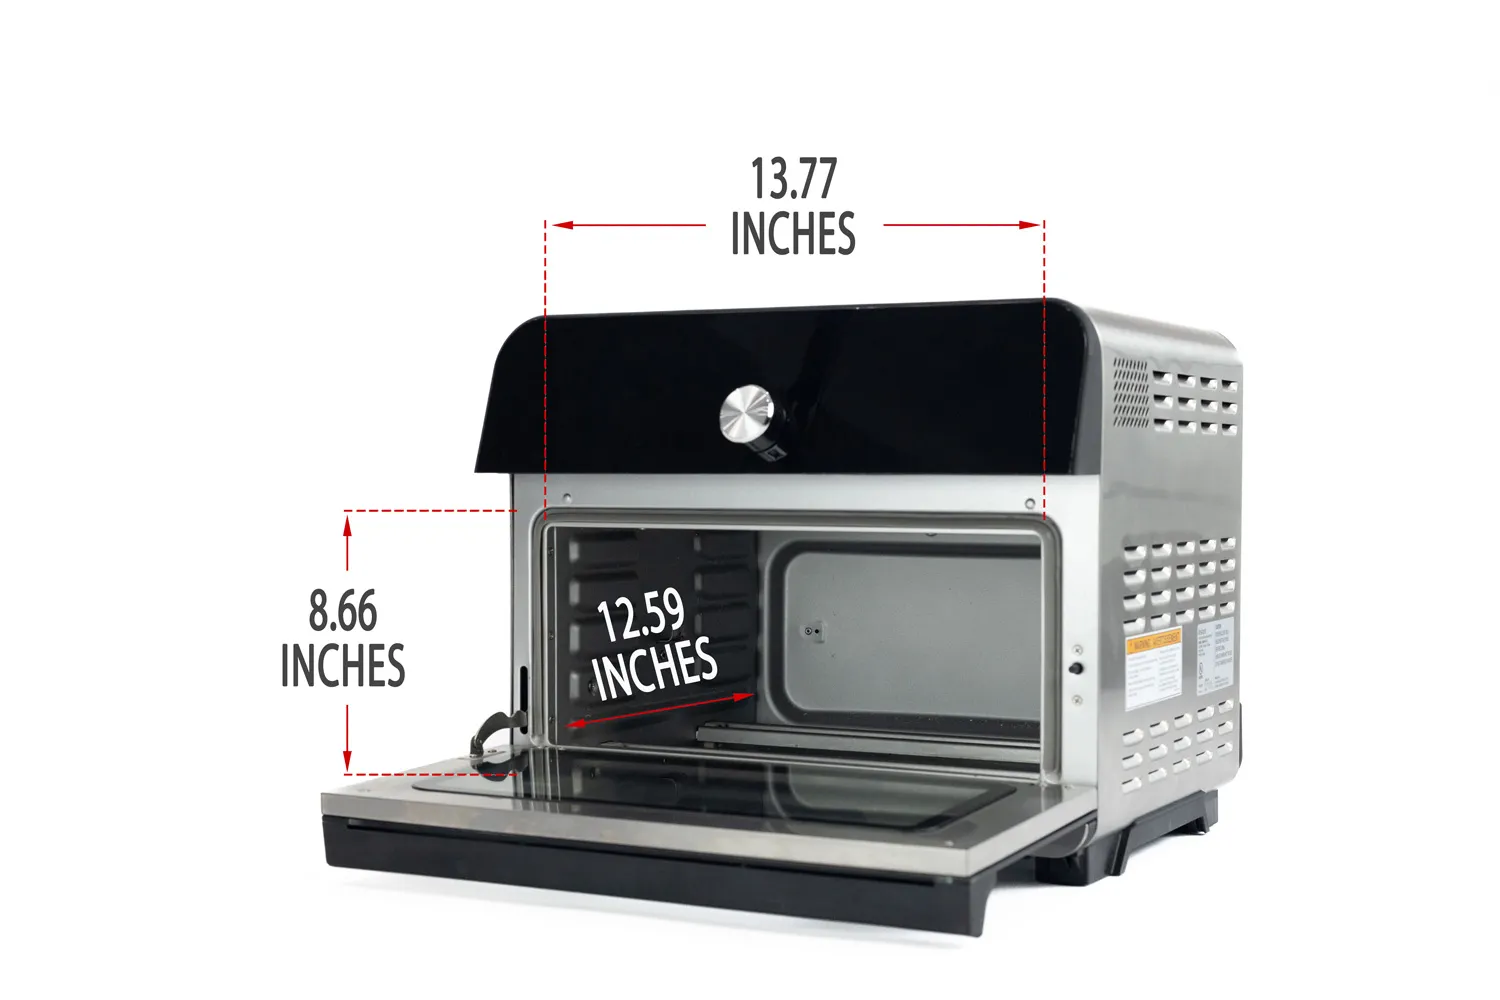 Instant Pot 18L Omni Plus Air Fryer Toaster Oven